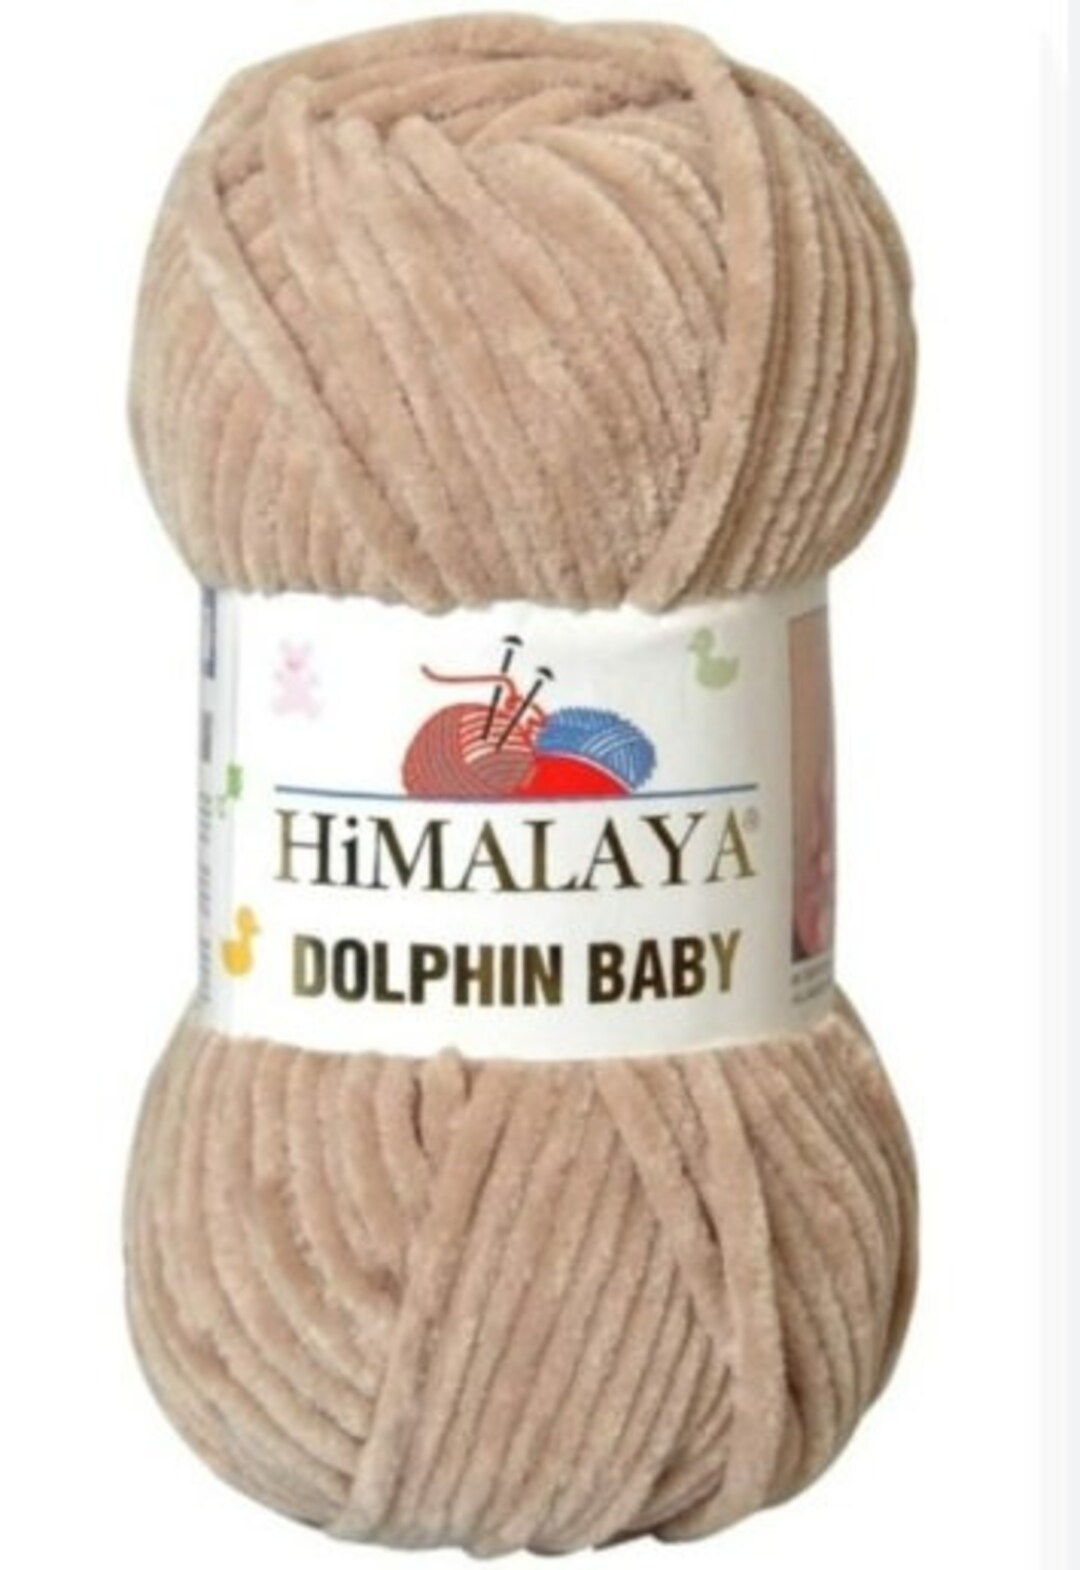 amigurumi bear Himalaya Dolphin Baby #yarn - I love it #crochet #plushtoys  #amigurumibear 